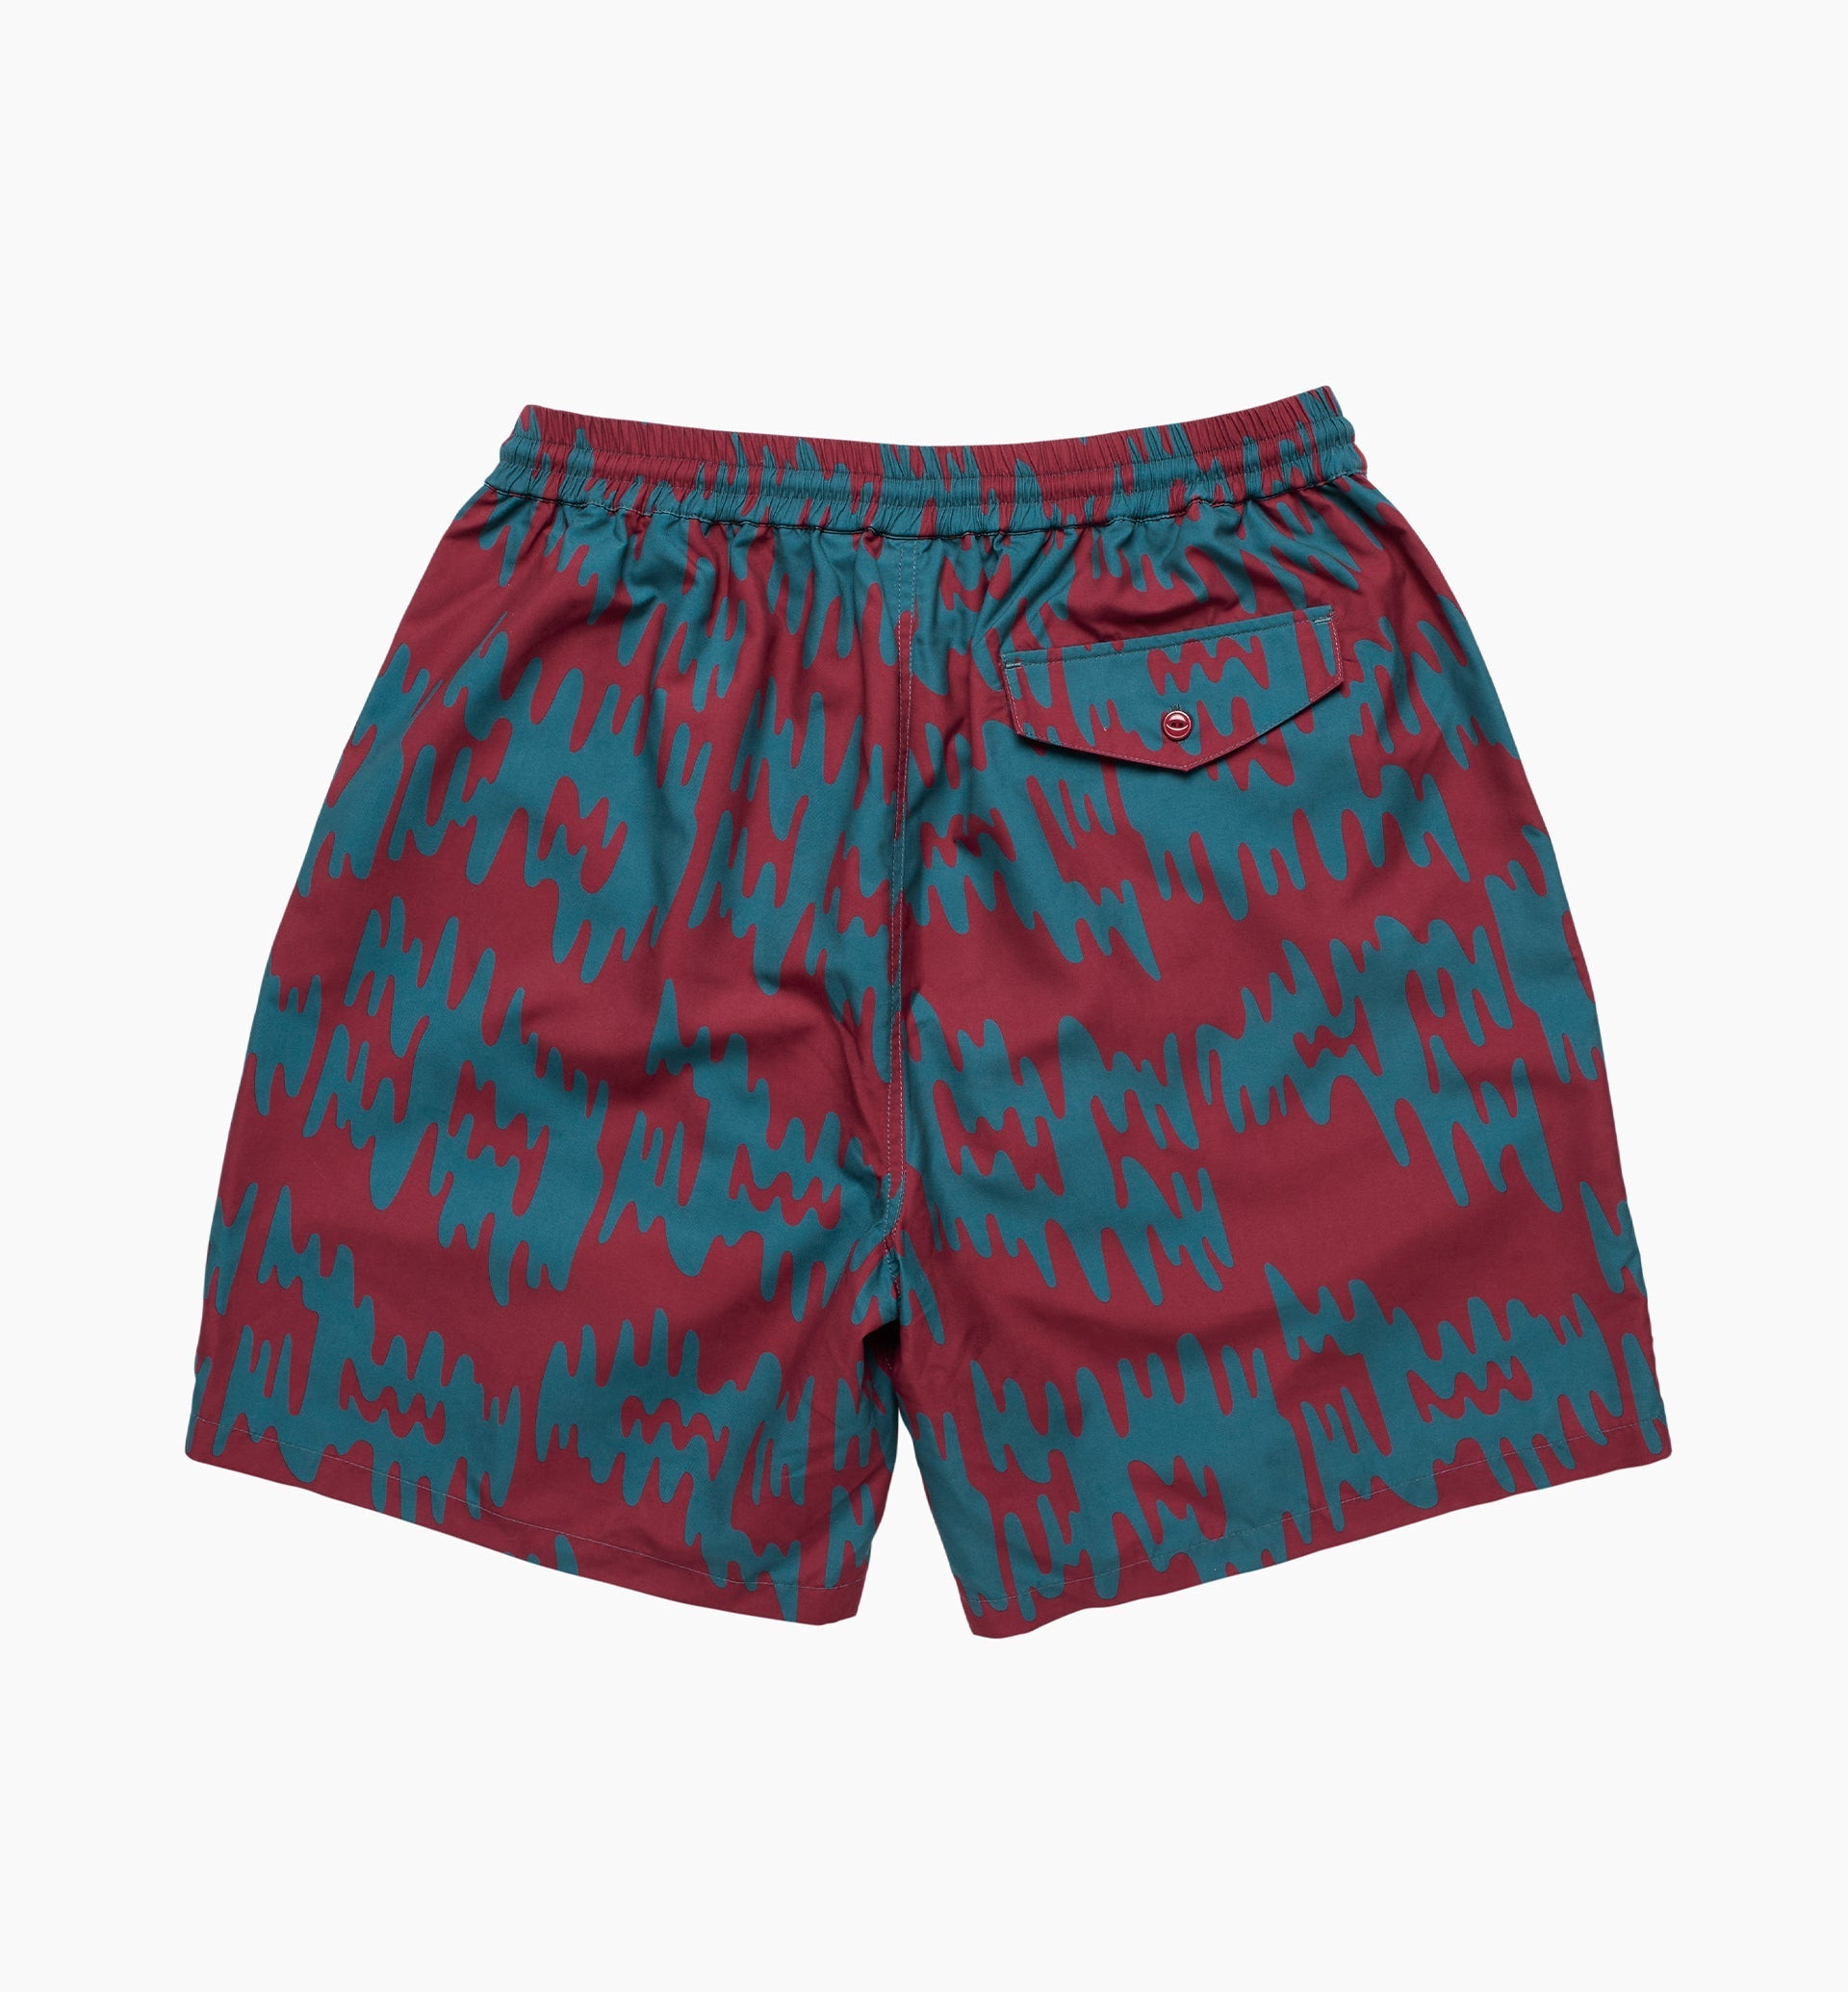 Parra - tremor pattern swim shorts